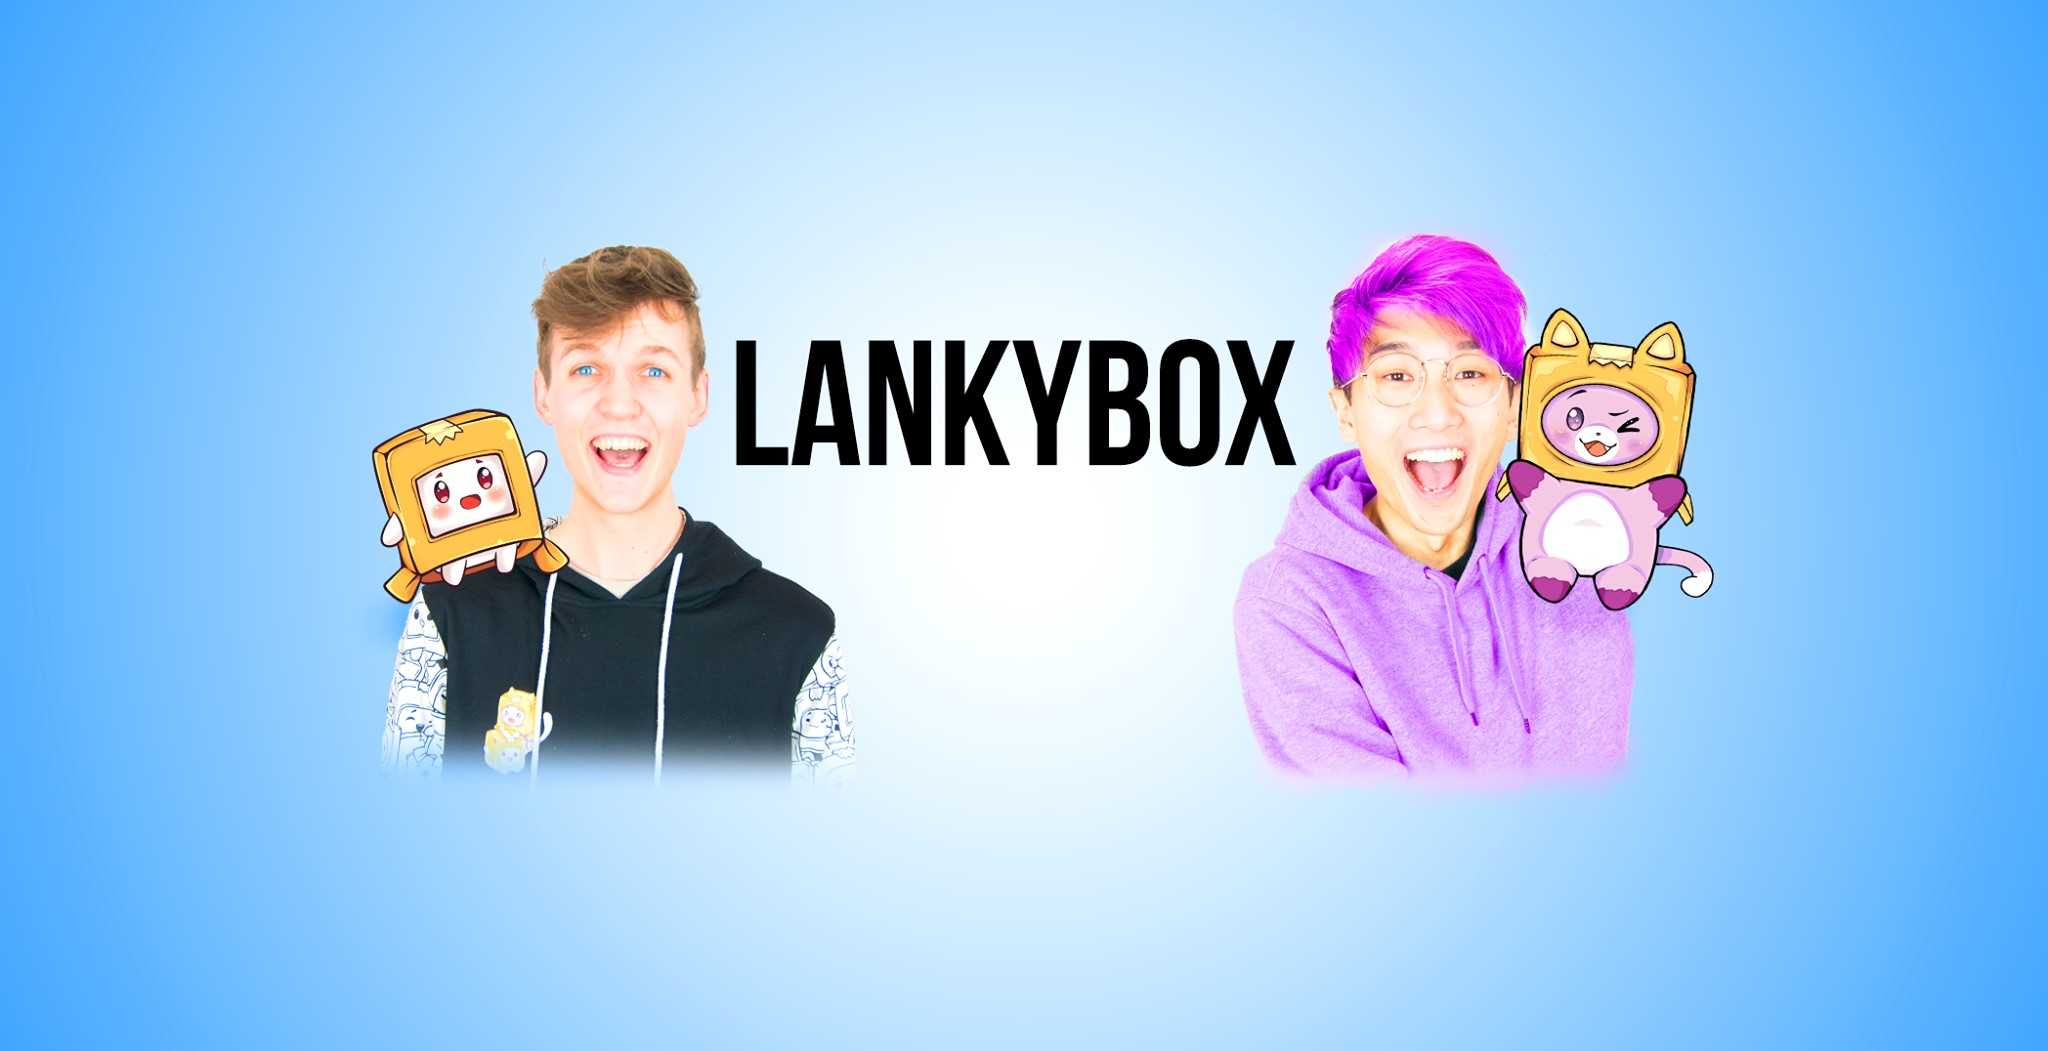 Lankybox fight